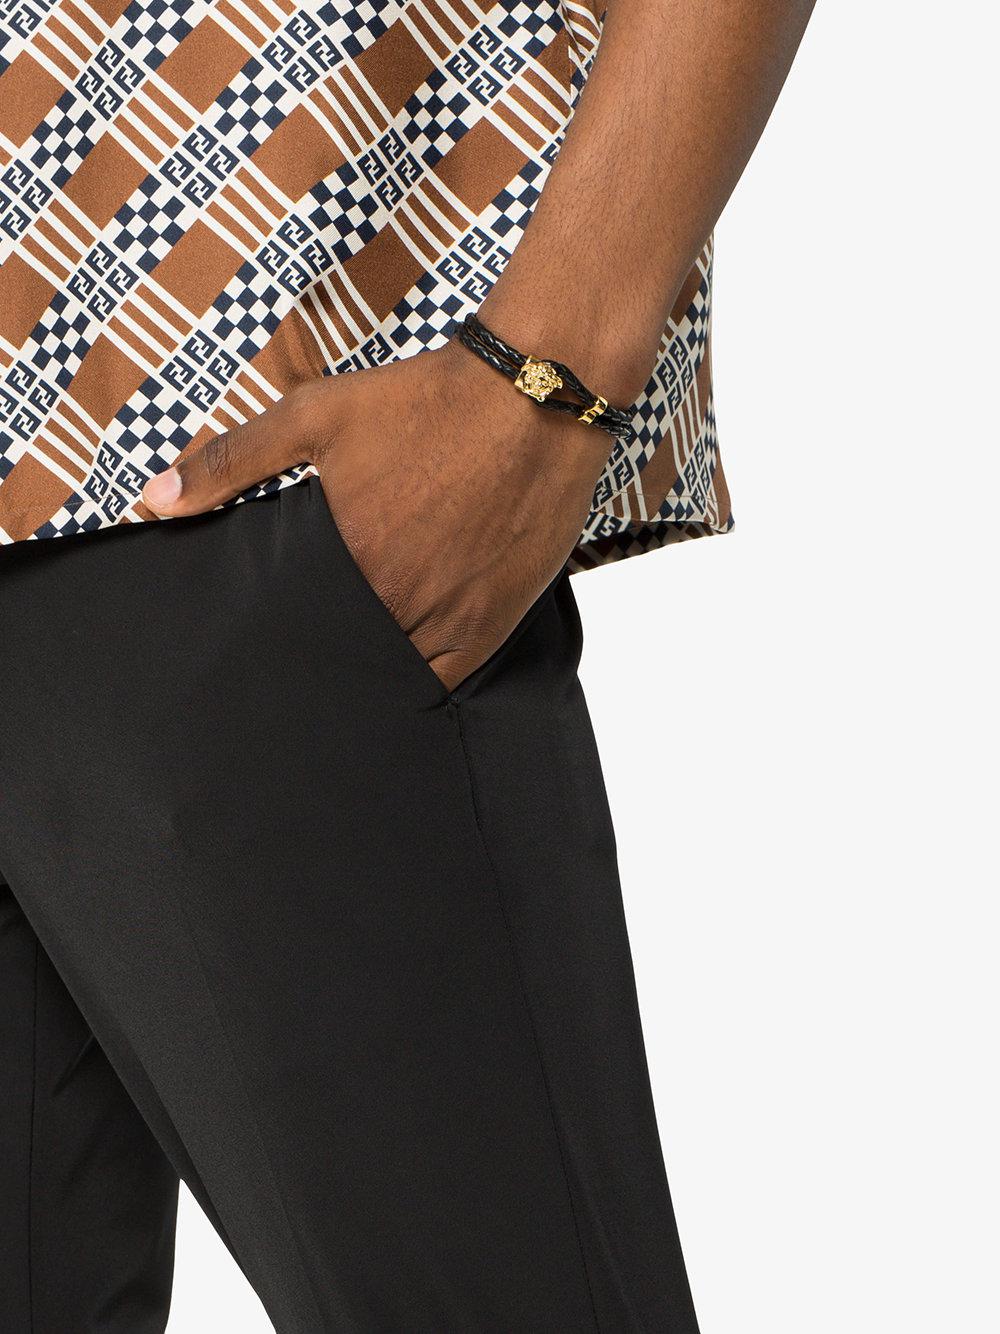 versace men's leather bracelet